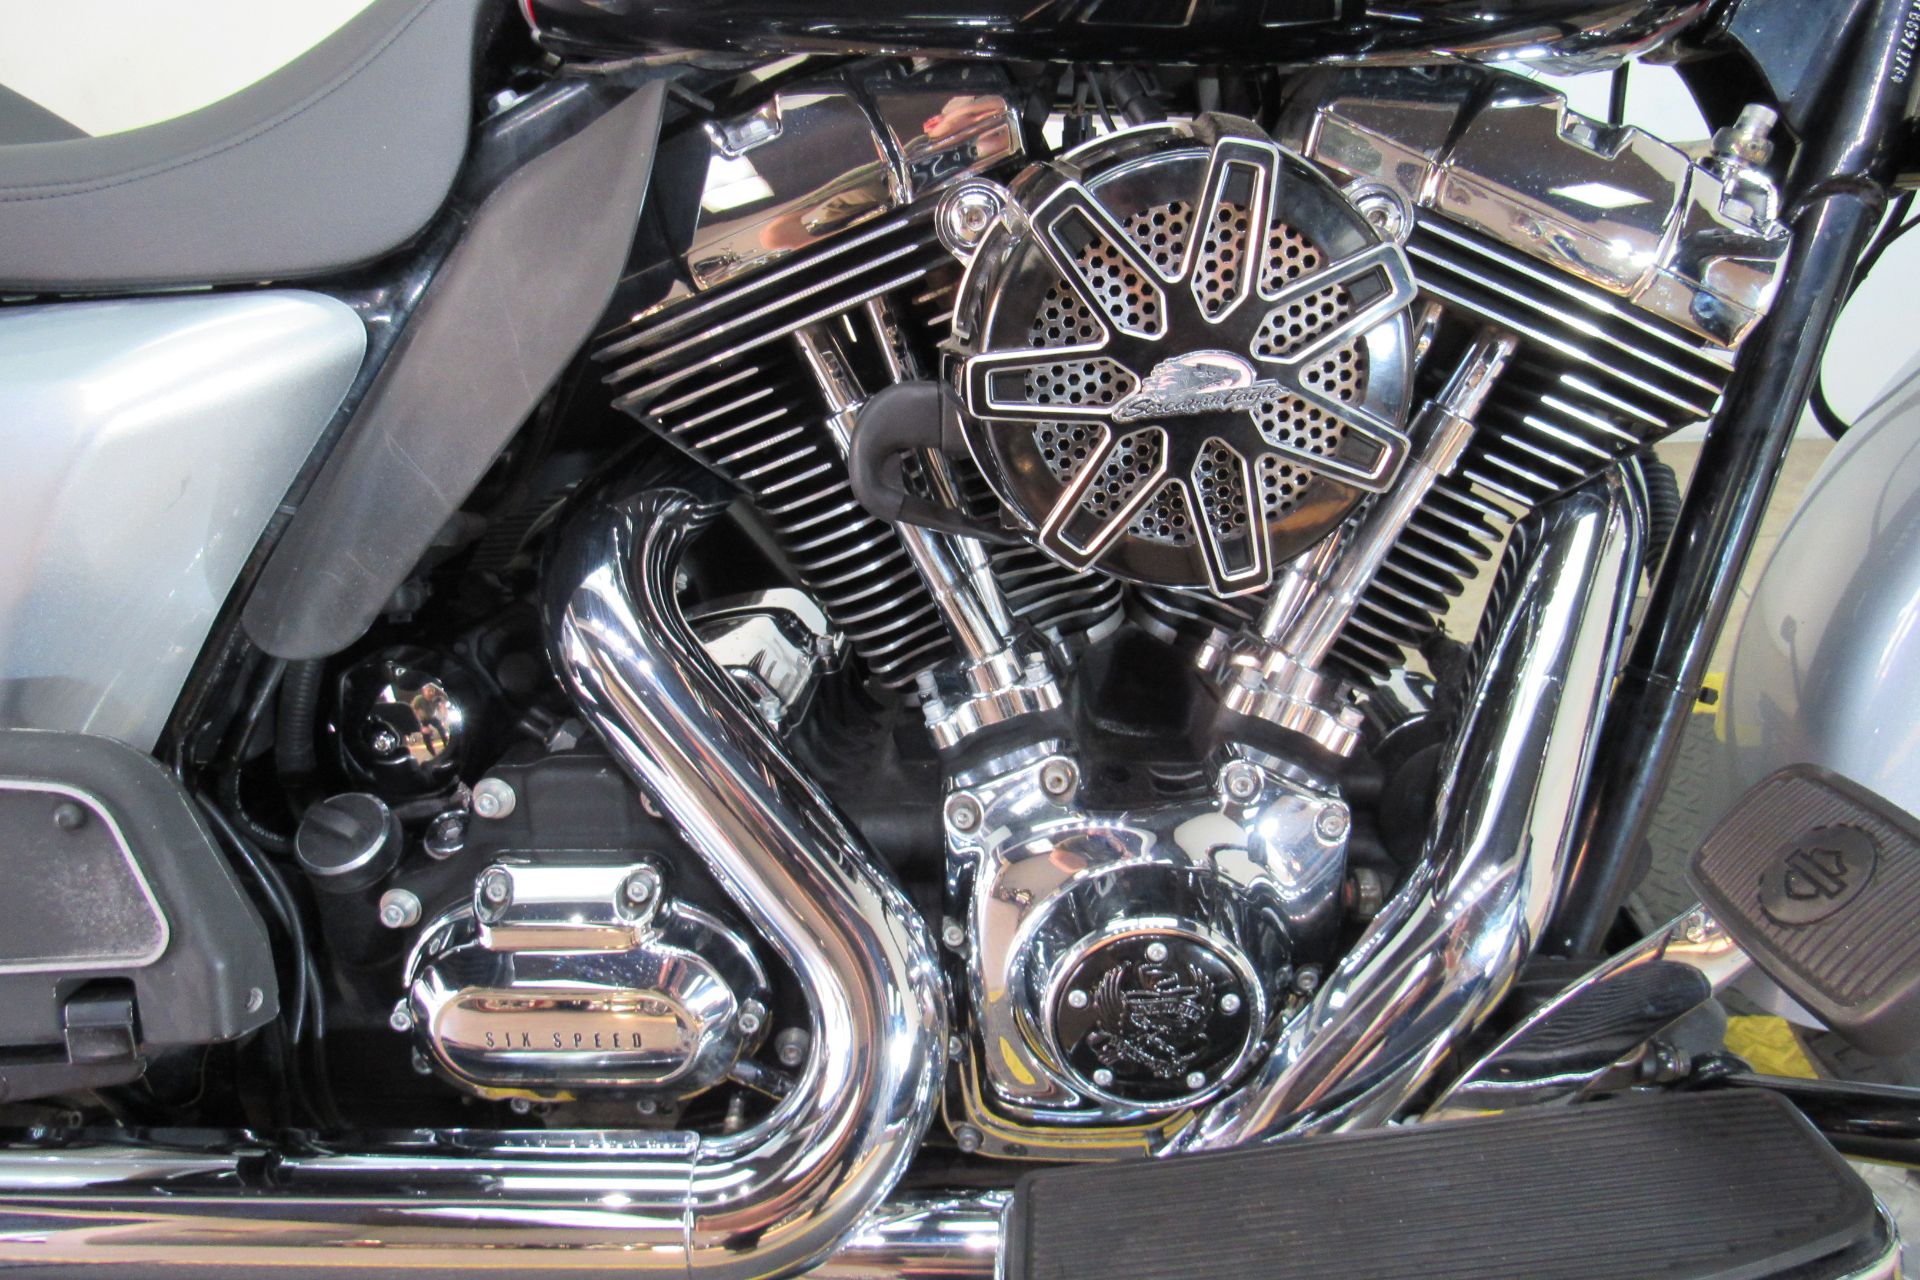 2015 Harley-Davidson Road King® in Temecula, California - Photo 13